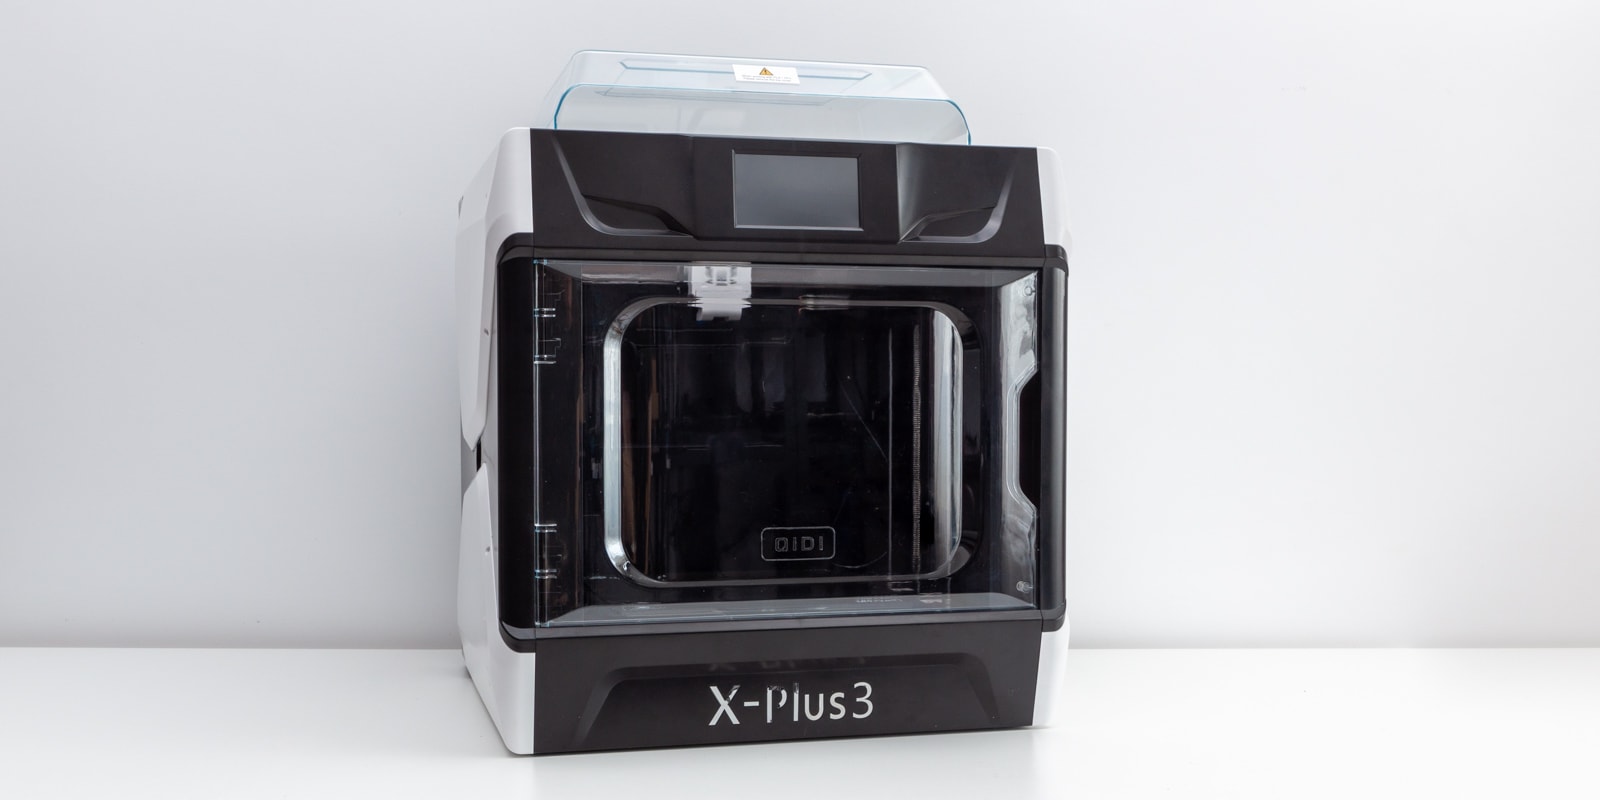 QIDI X-Plus 3 3D printer review